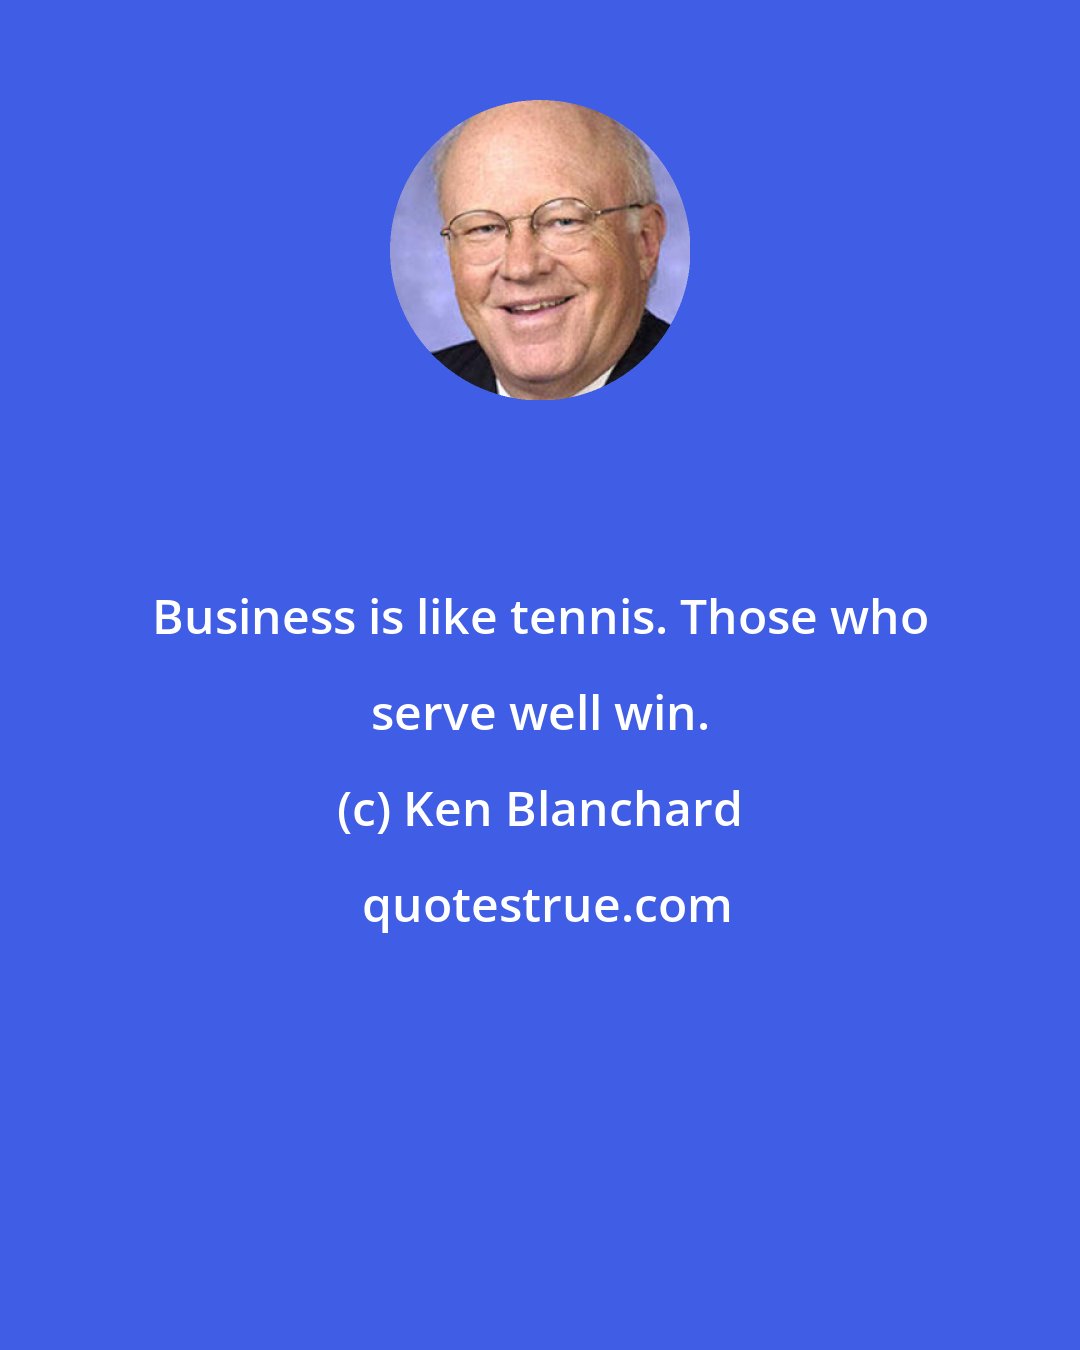 Ken Blanchard: Business is like tennis. Those who serve well win.